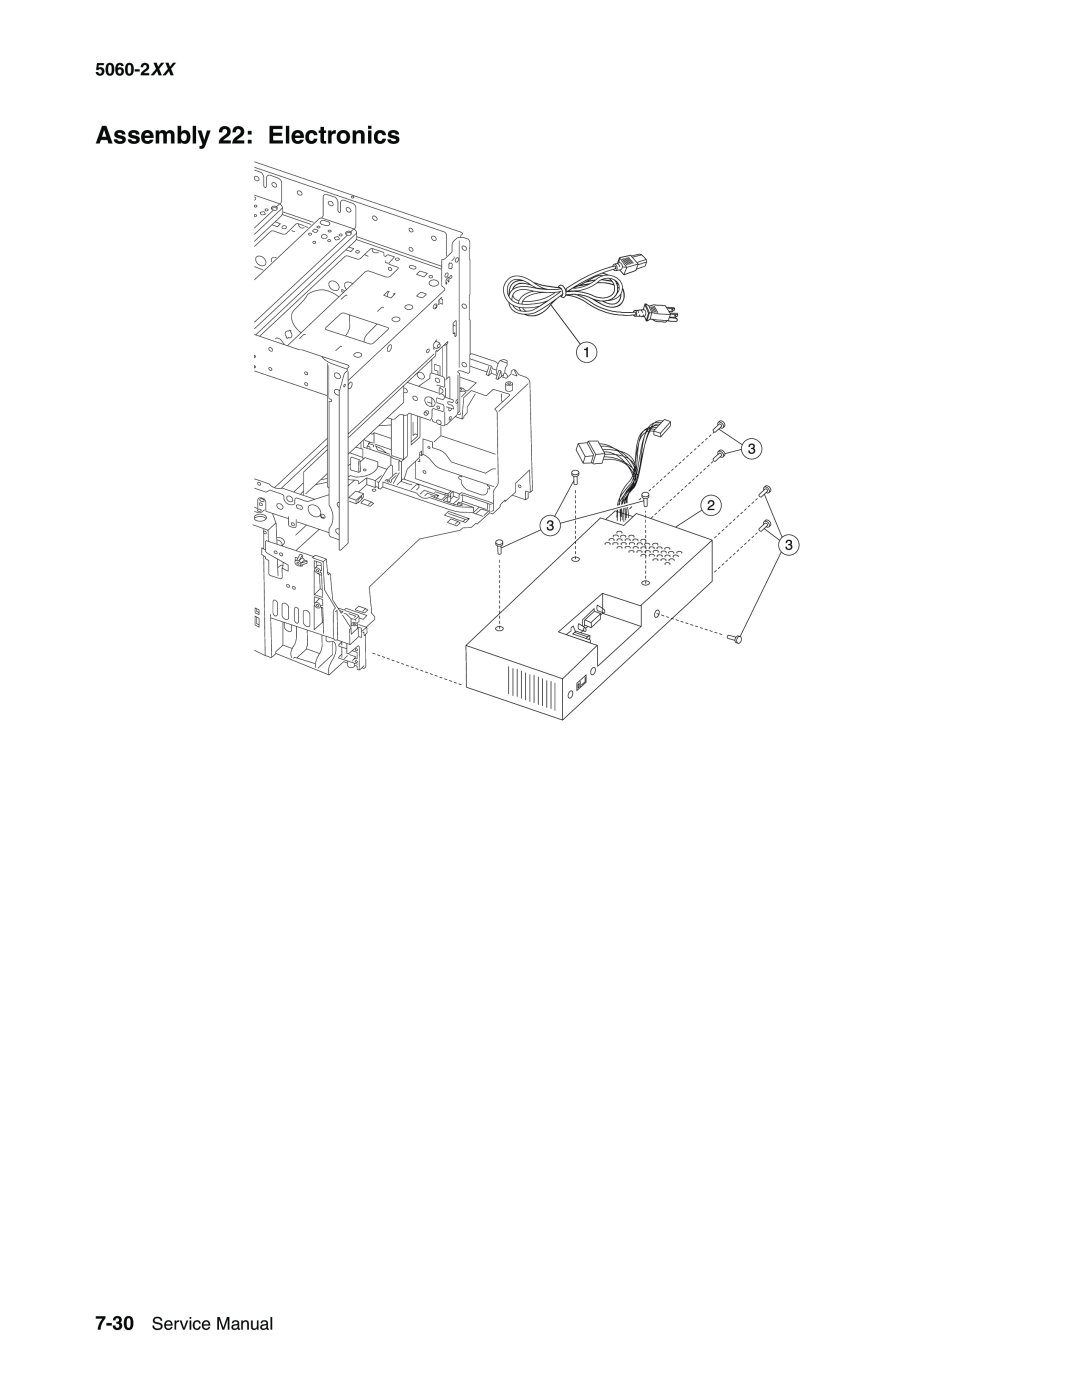 Lexmark 5060-2XX manual Assembly 22 Electronics, Service Manual 